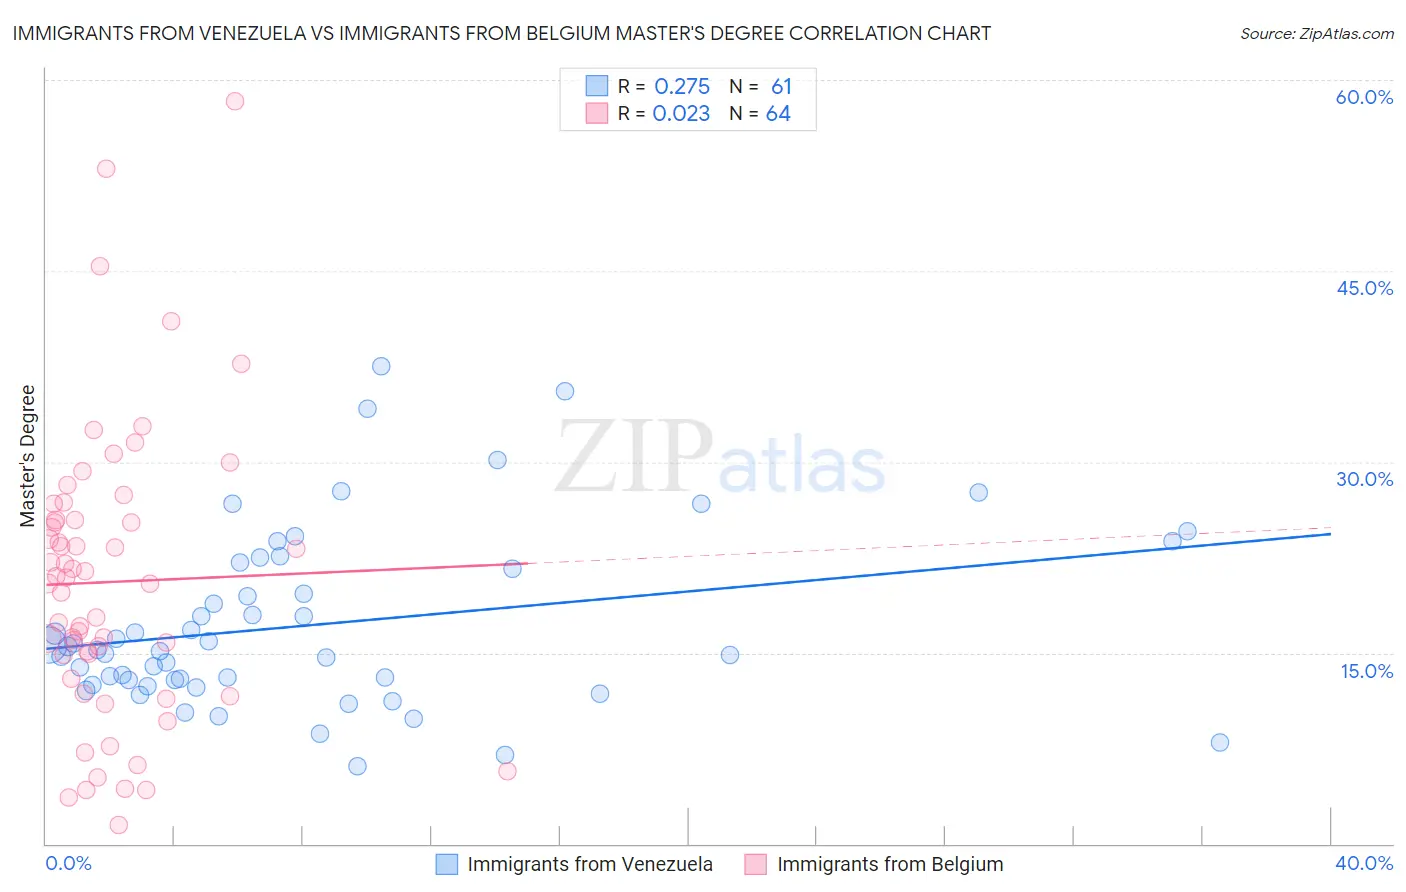 Immigrants from Venezuela vs Immigrants from Belgium Master's Degree